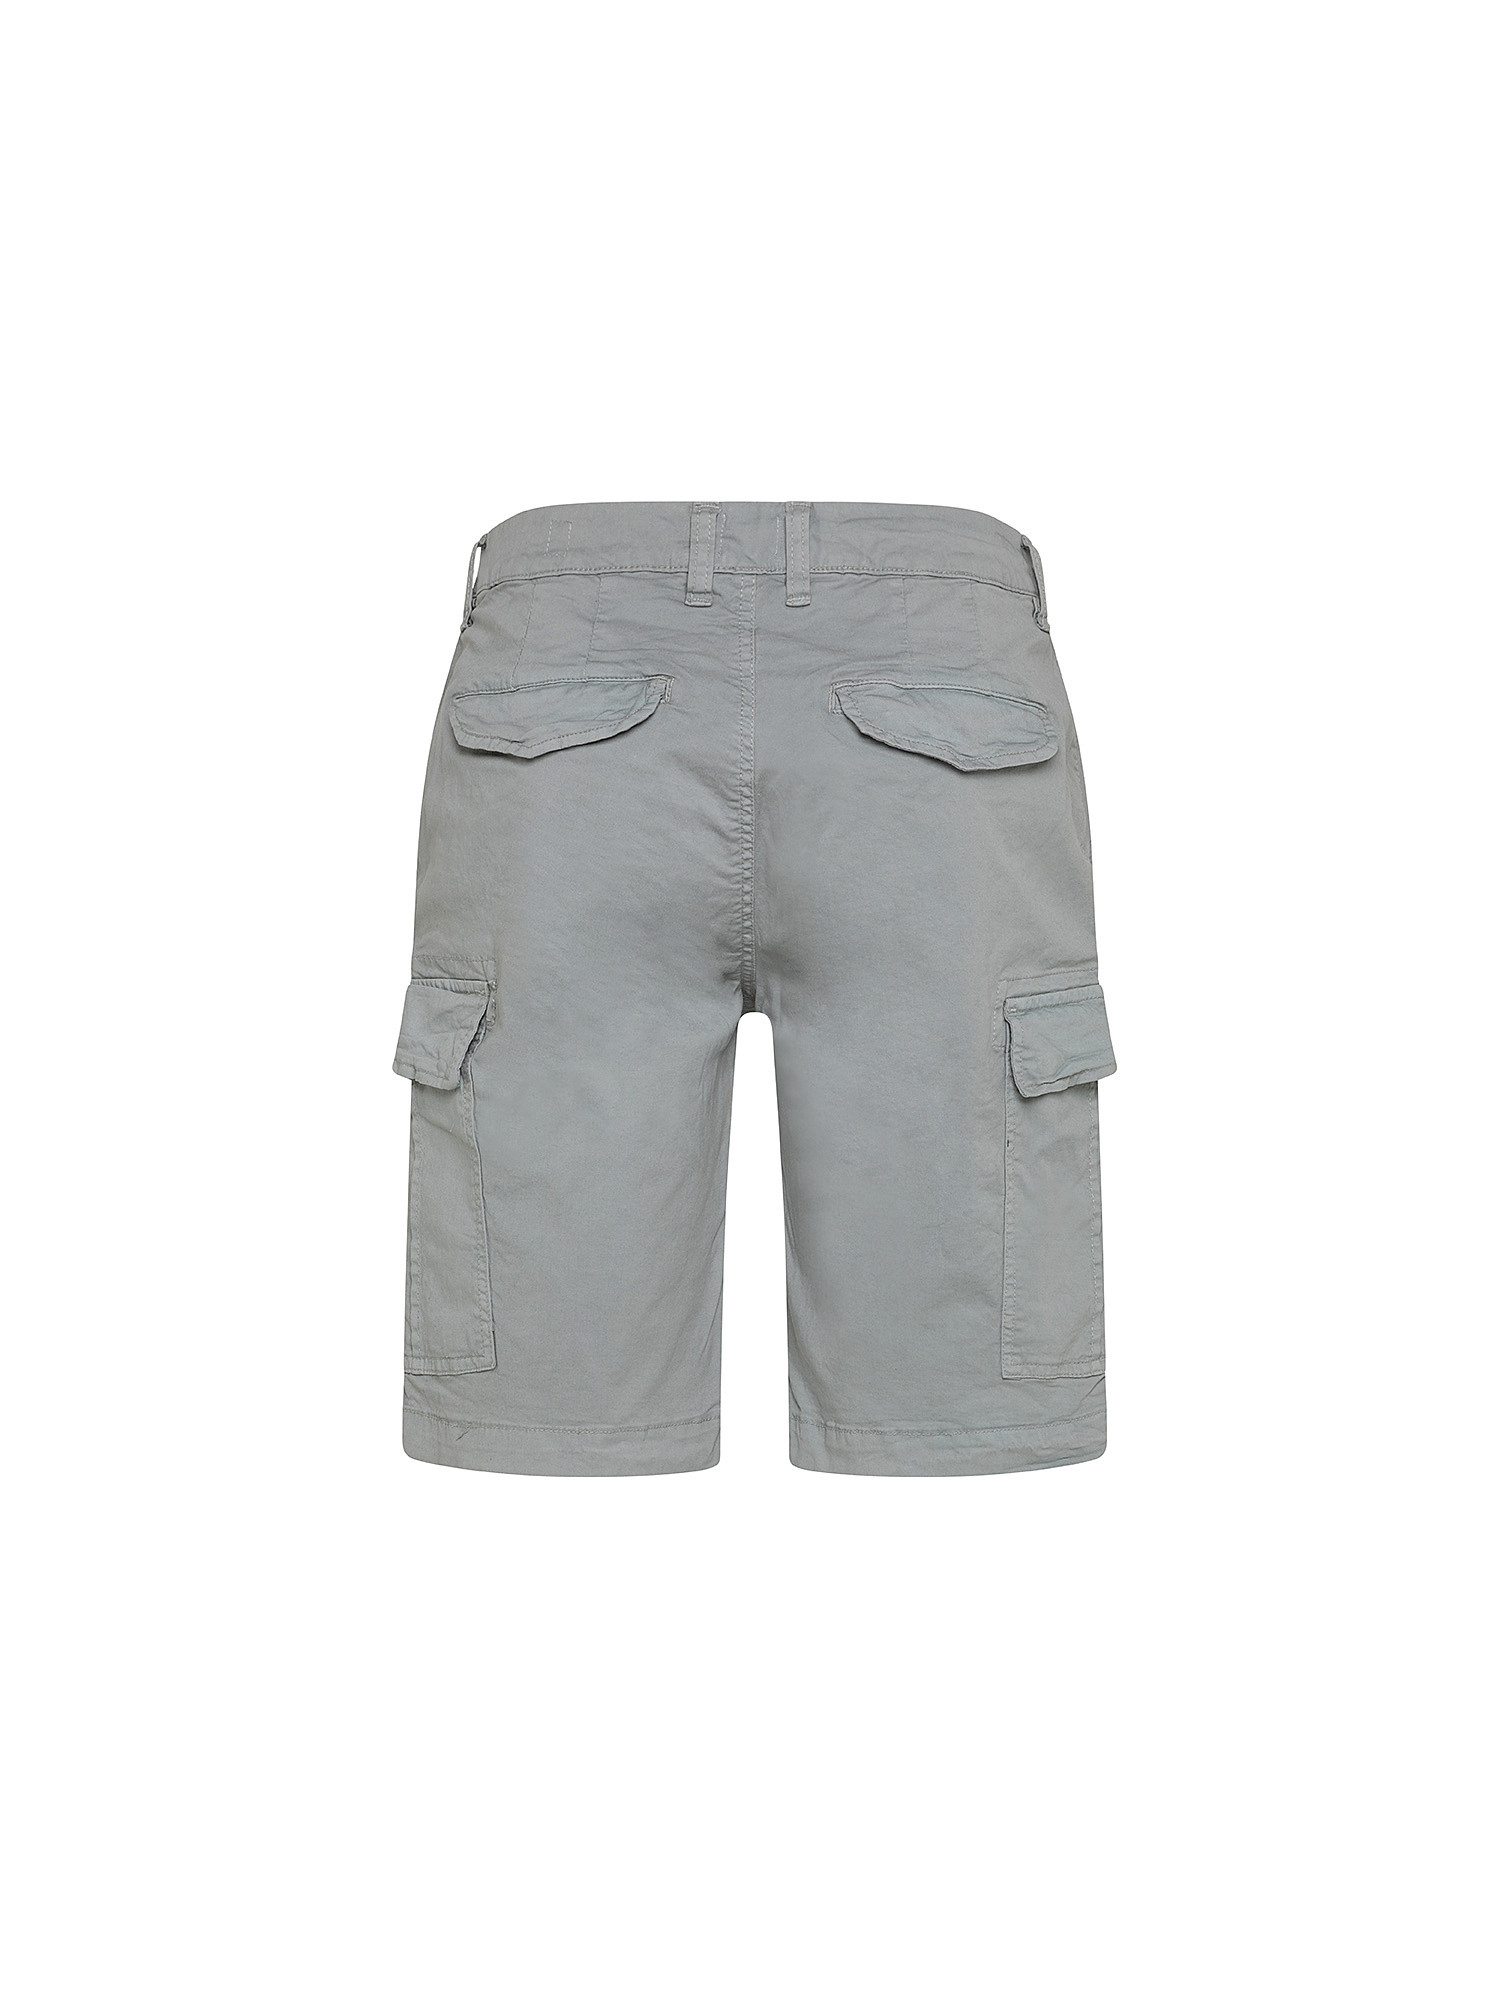 Stretch cotton cargo bermuda shorts, Light Grey, large image number 1